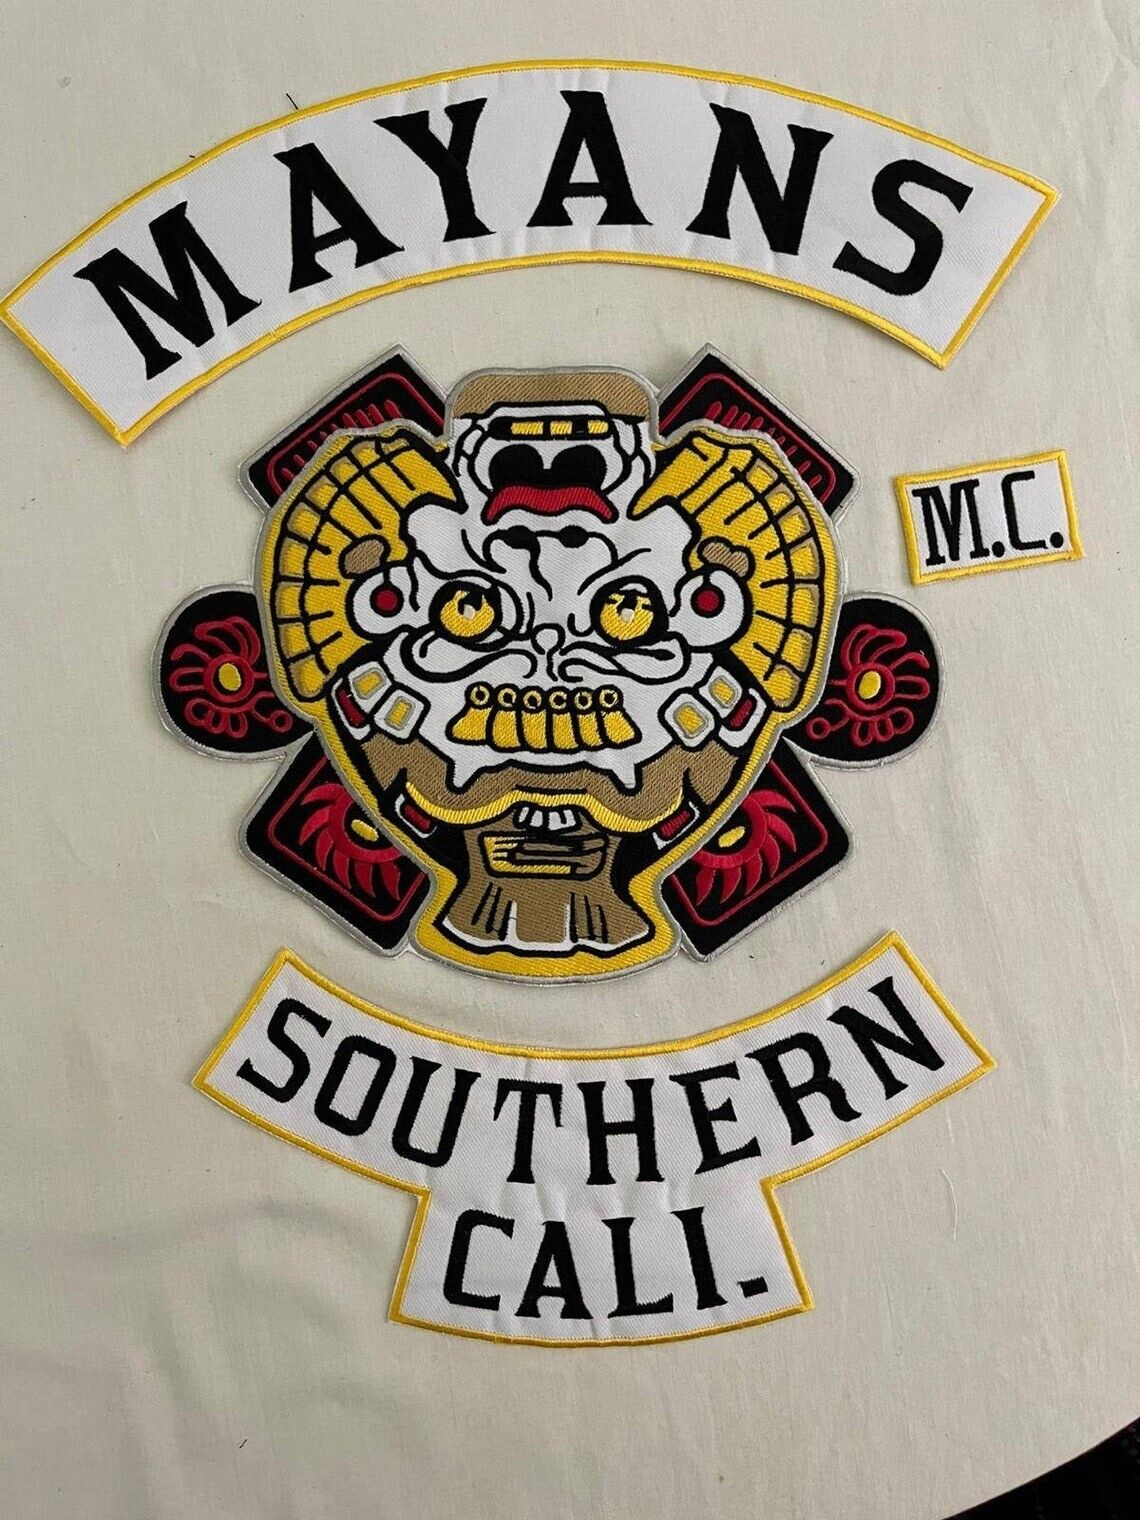 Mayans Southern Cali mc iron on embroidered set Large size